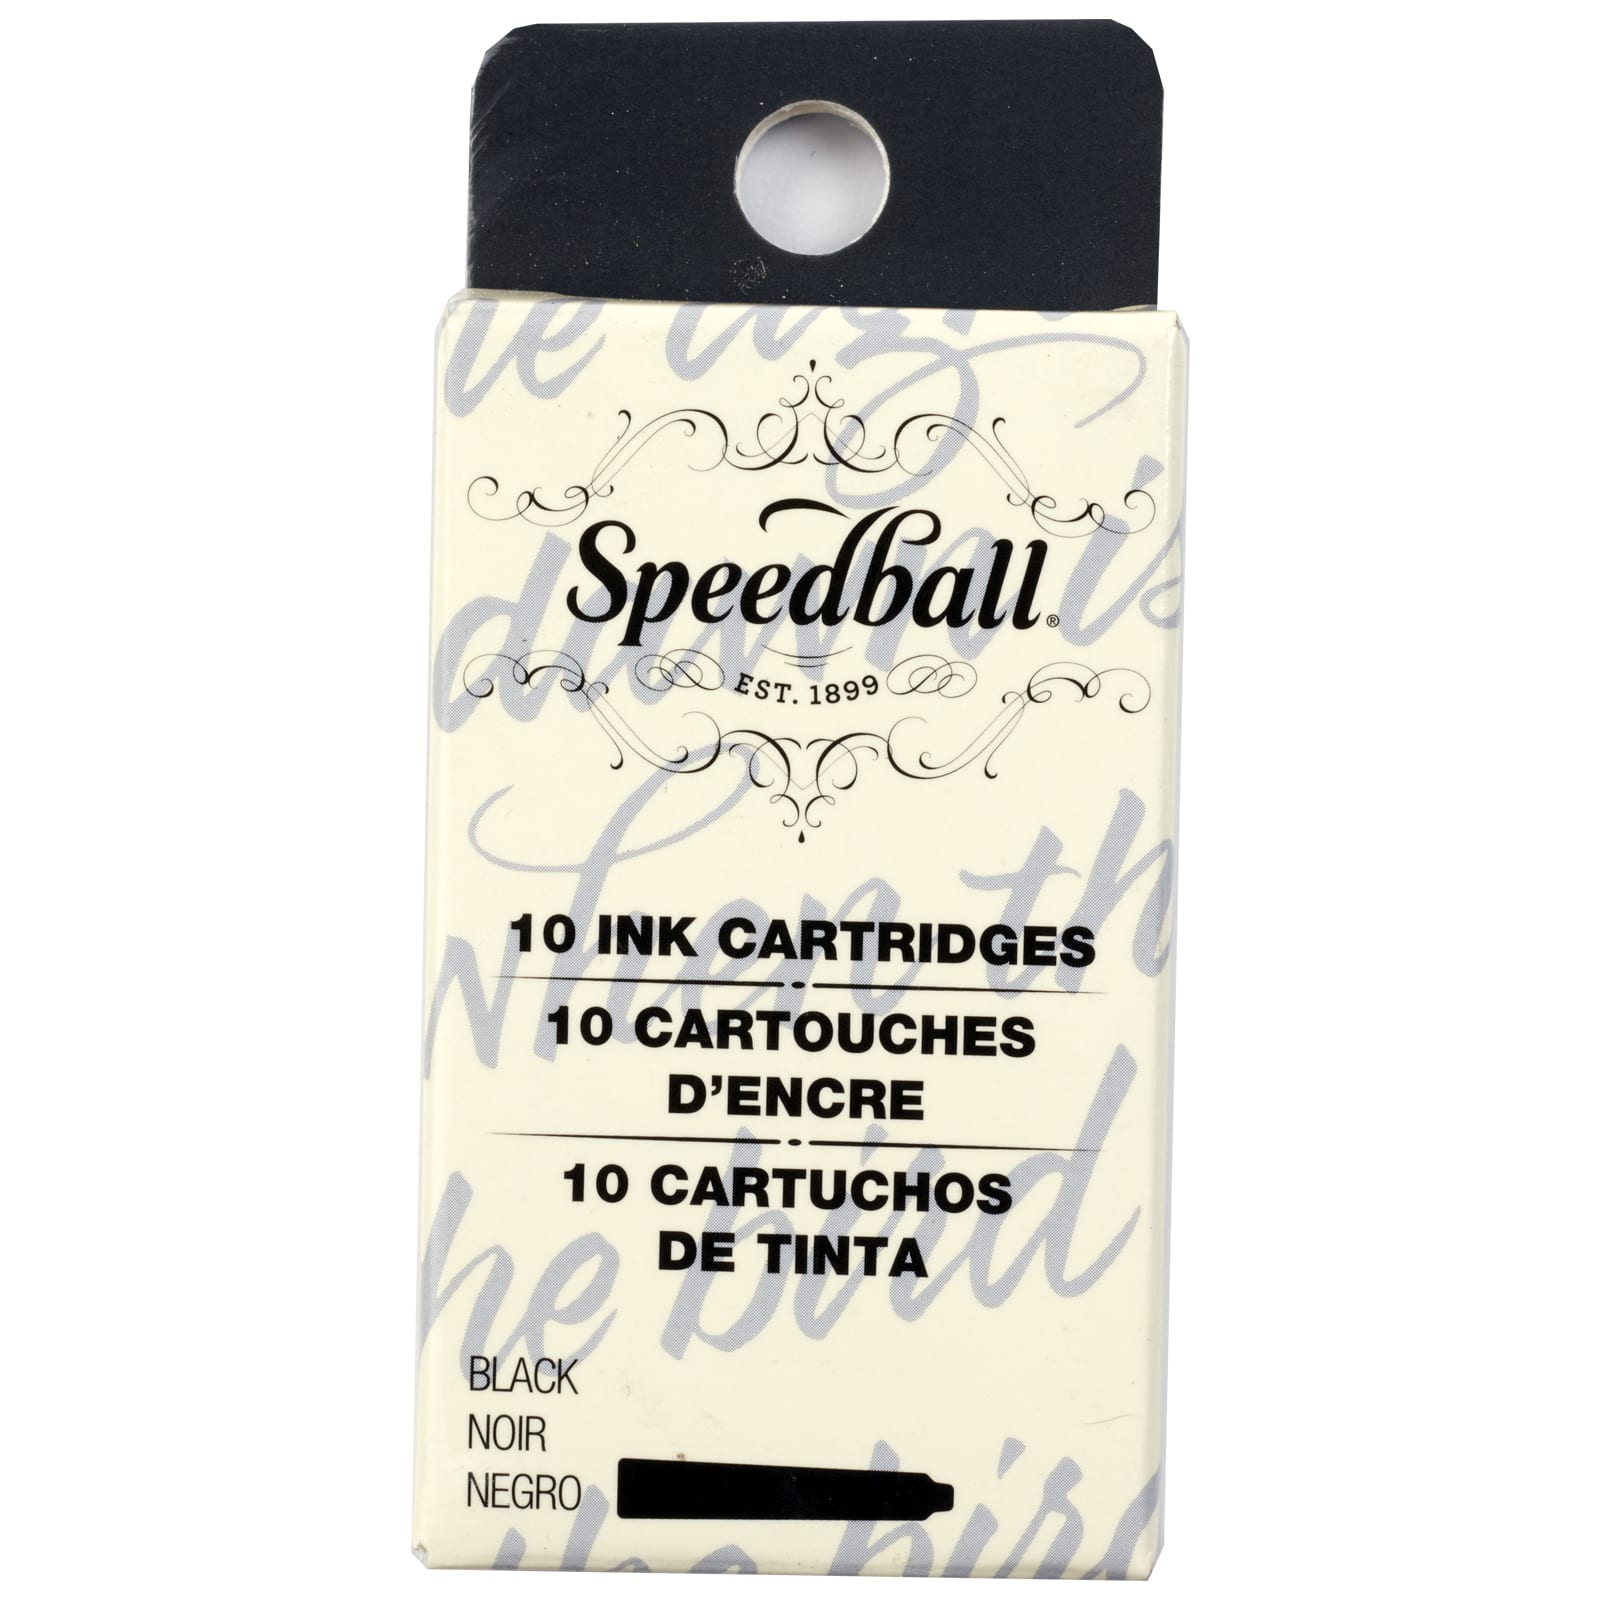 Speedball Ink Cartridges 10 pack - Black & Colors • PAPER SCISSORS STONE